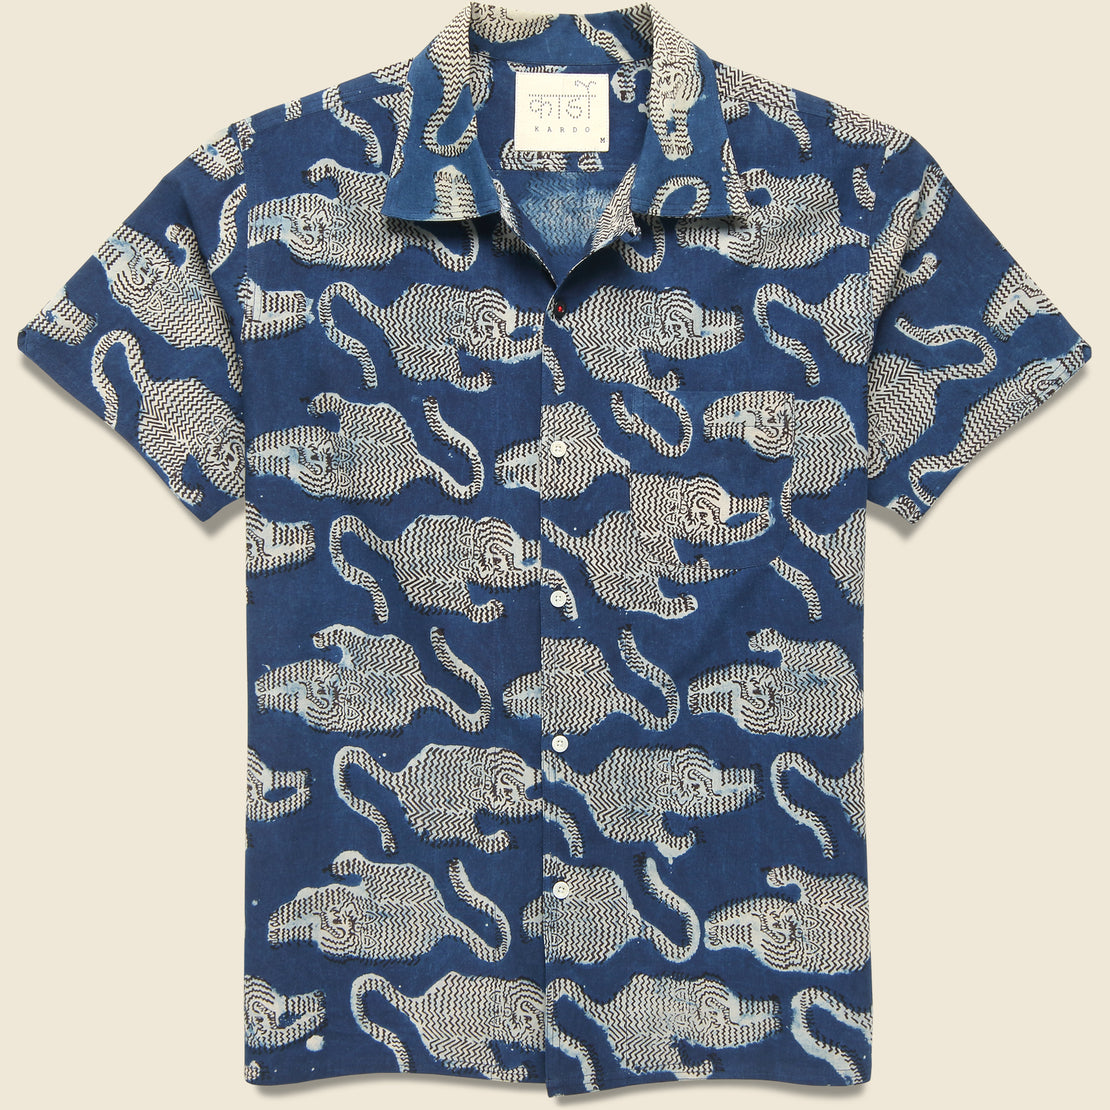 Kardo Tiger Block Print Shirt - Blue